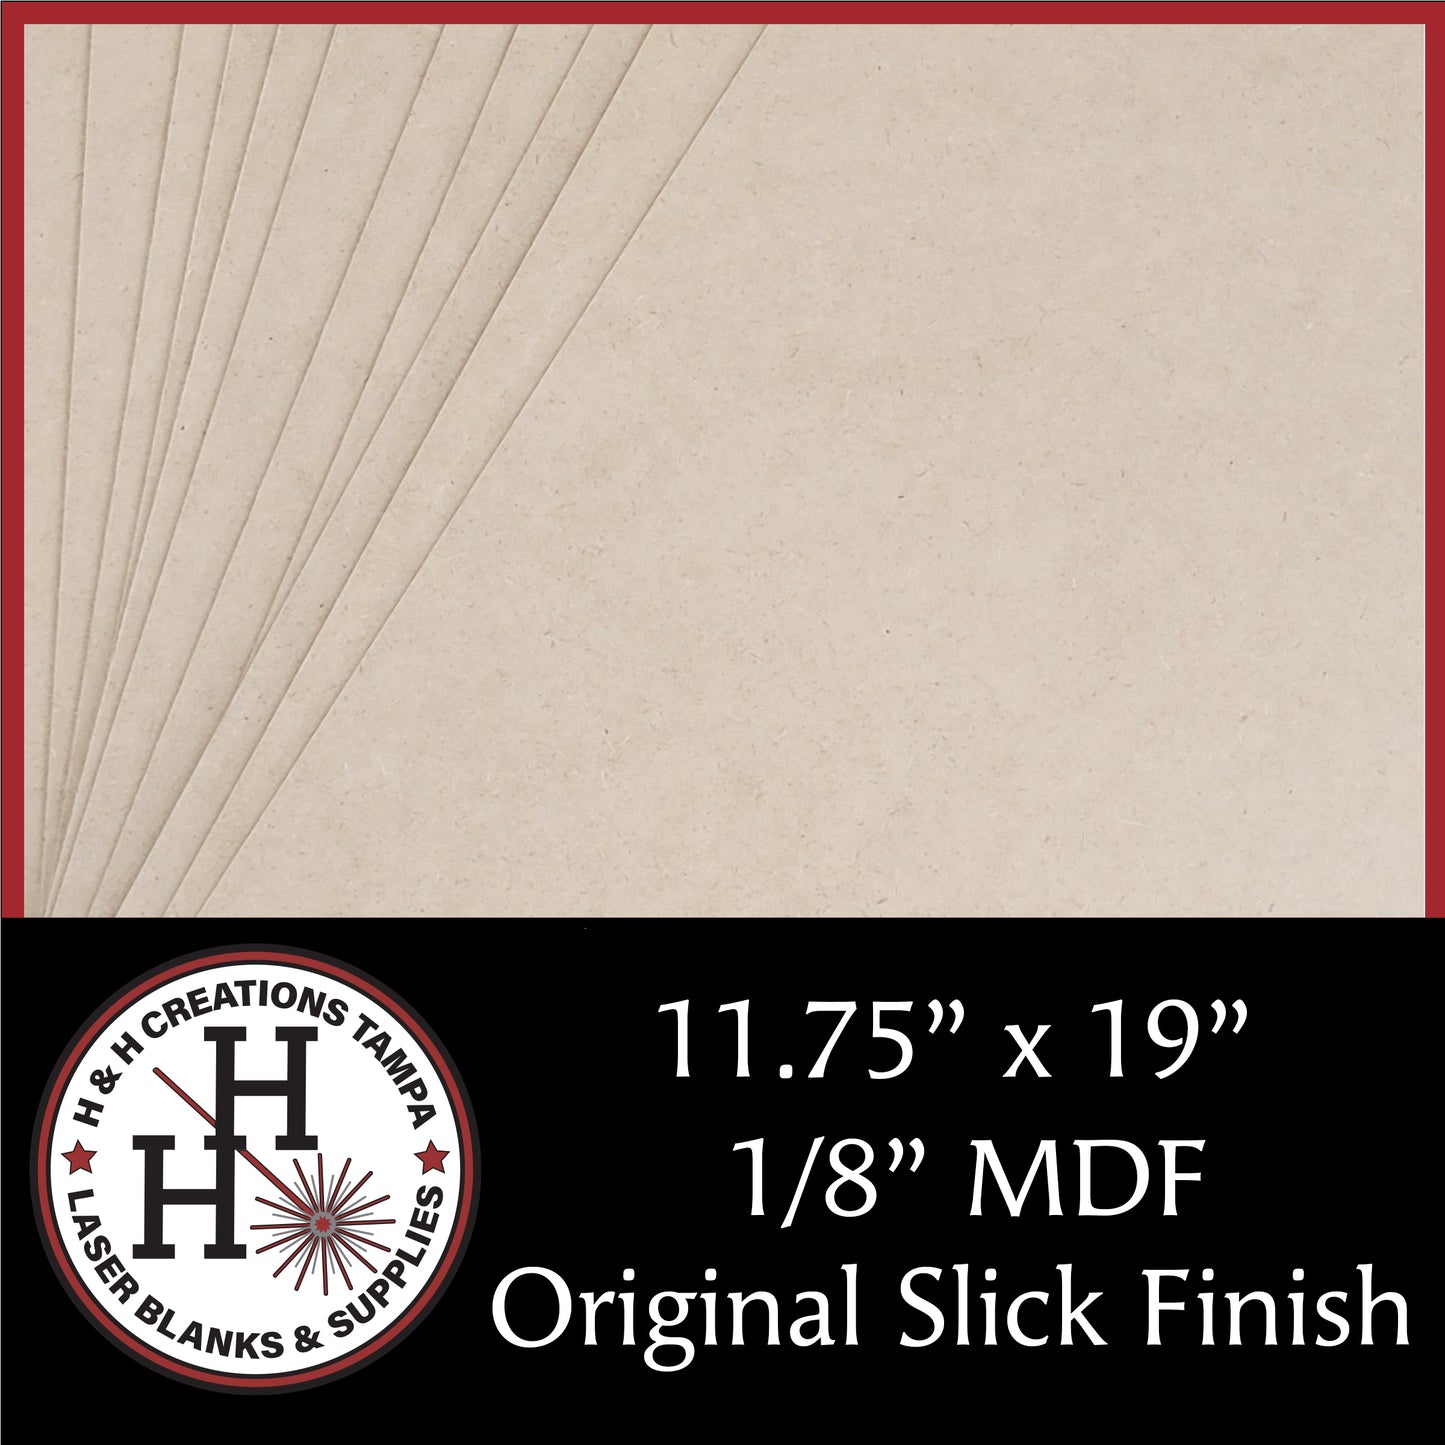 1/8" Premium MDF/HDF Draft Board - Original Slick Finish - 11.75" x 19"